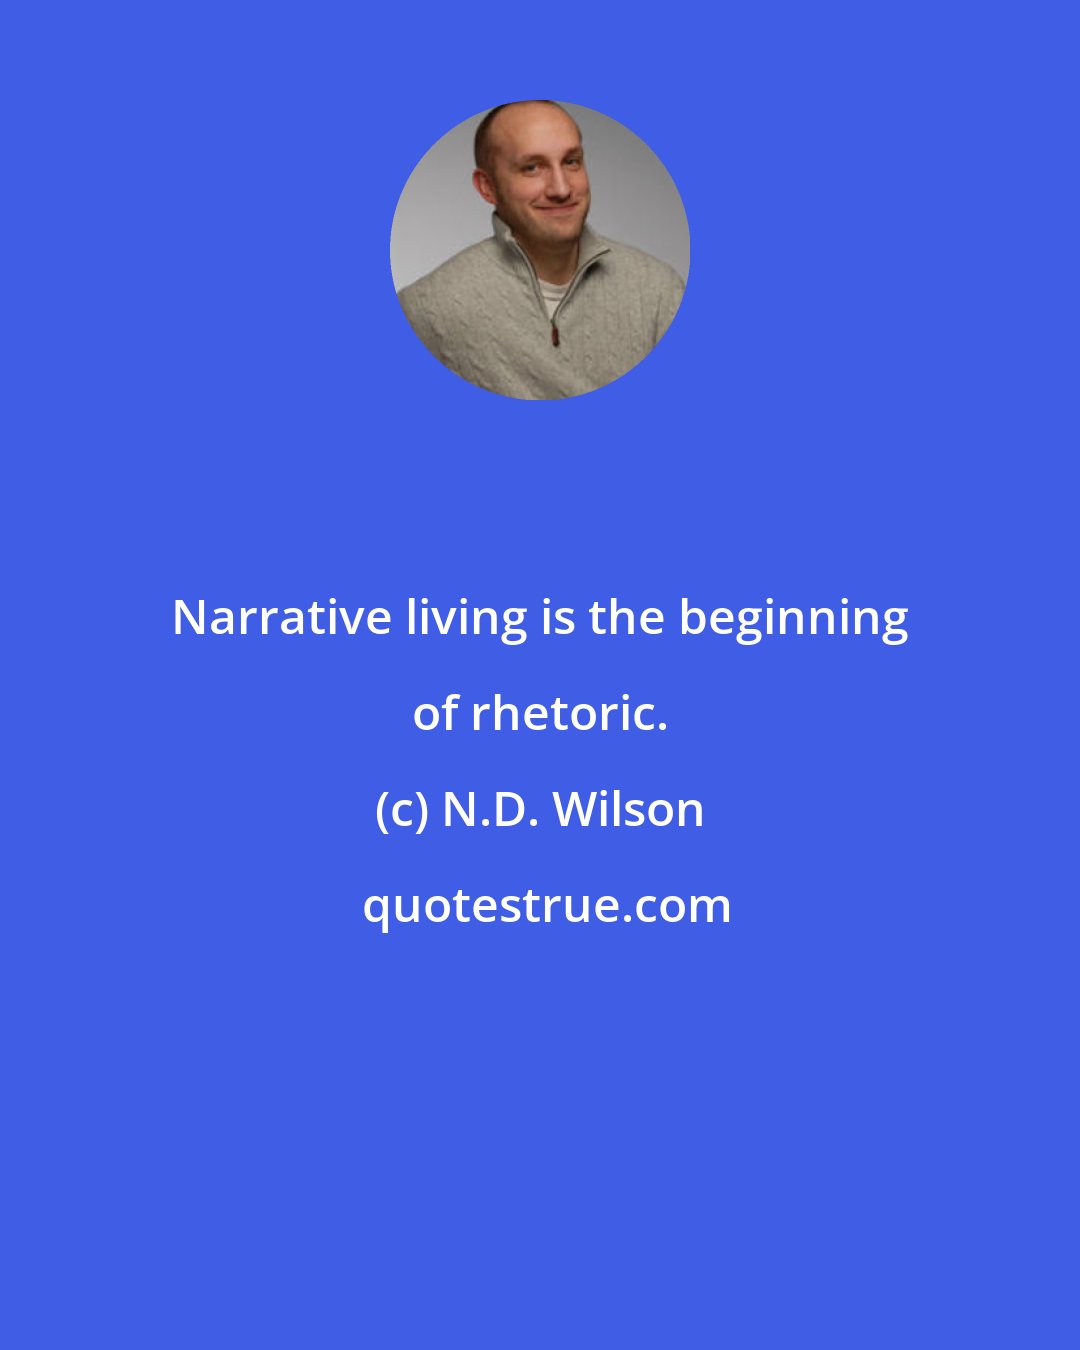 N.D. Wilson: Narrative living is the beginning of rhetoric.